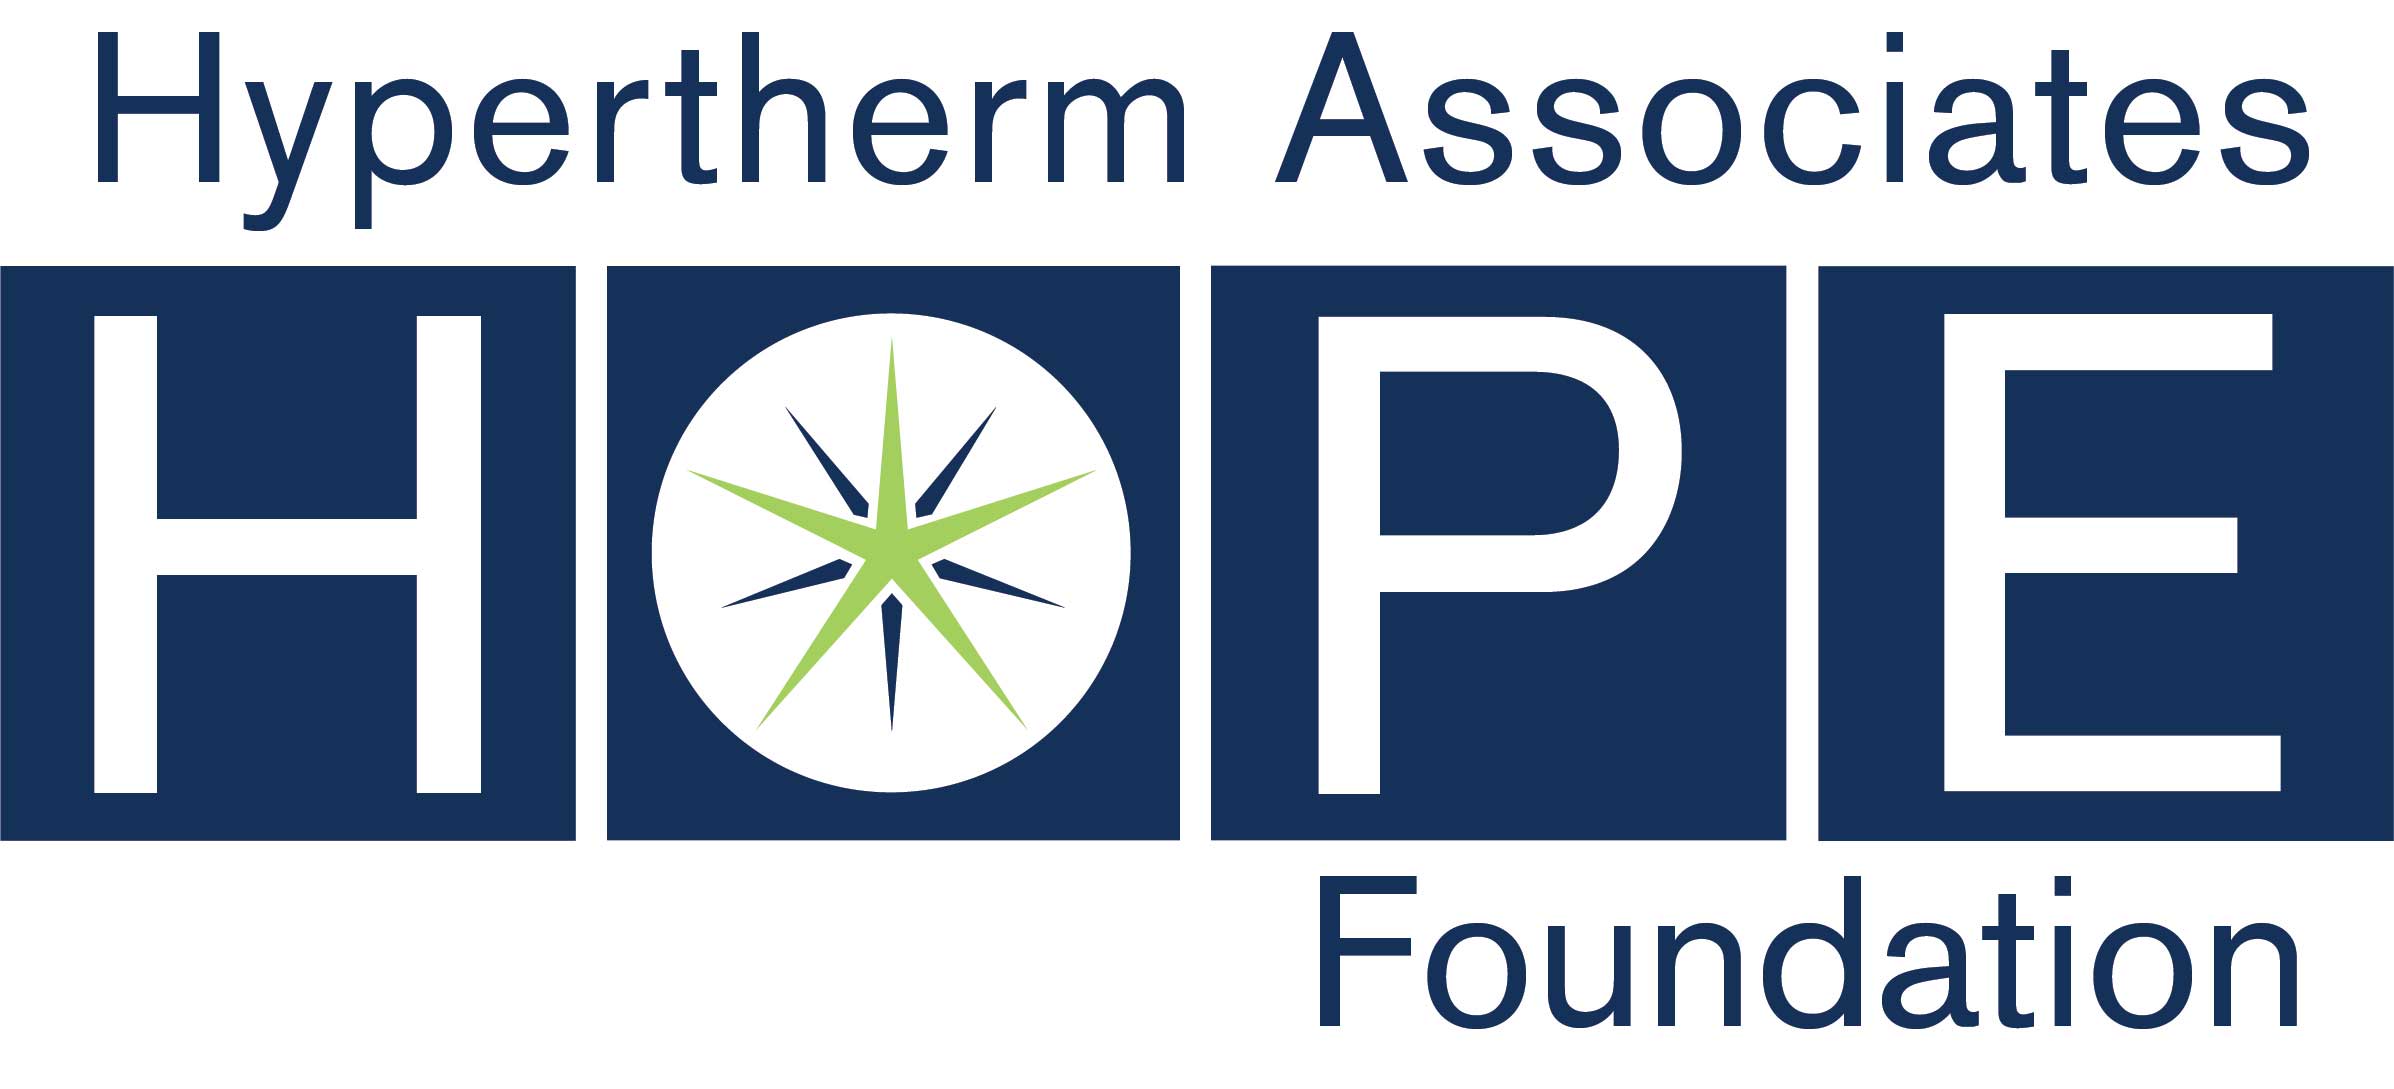 Hypertherm Associates - HOPE Foundation logo